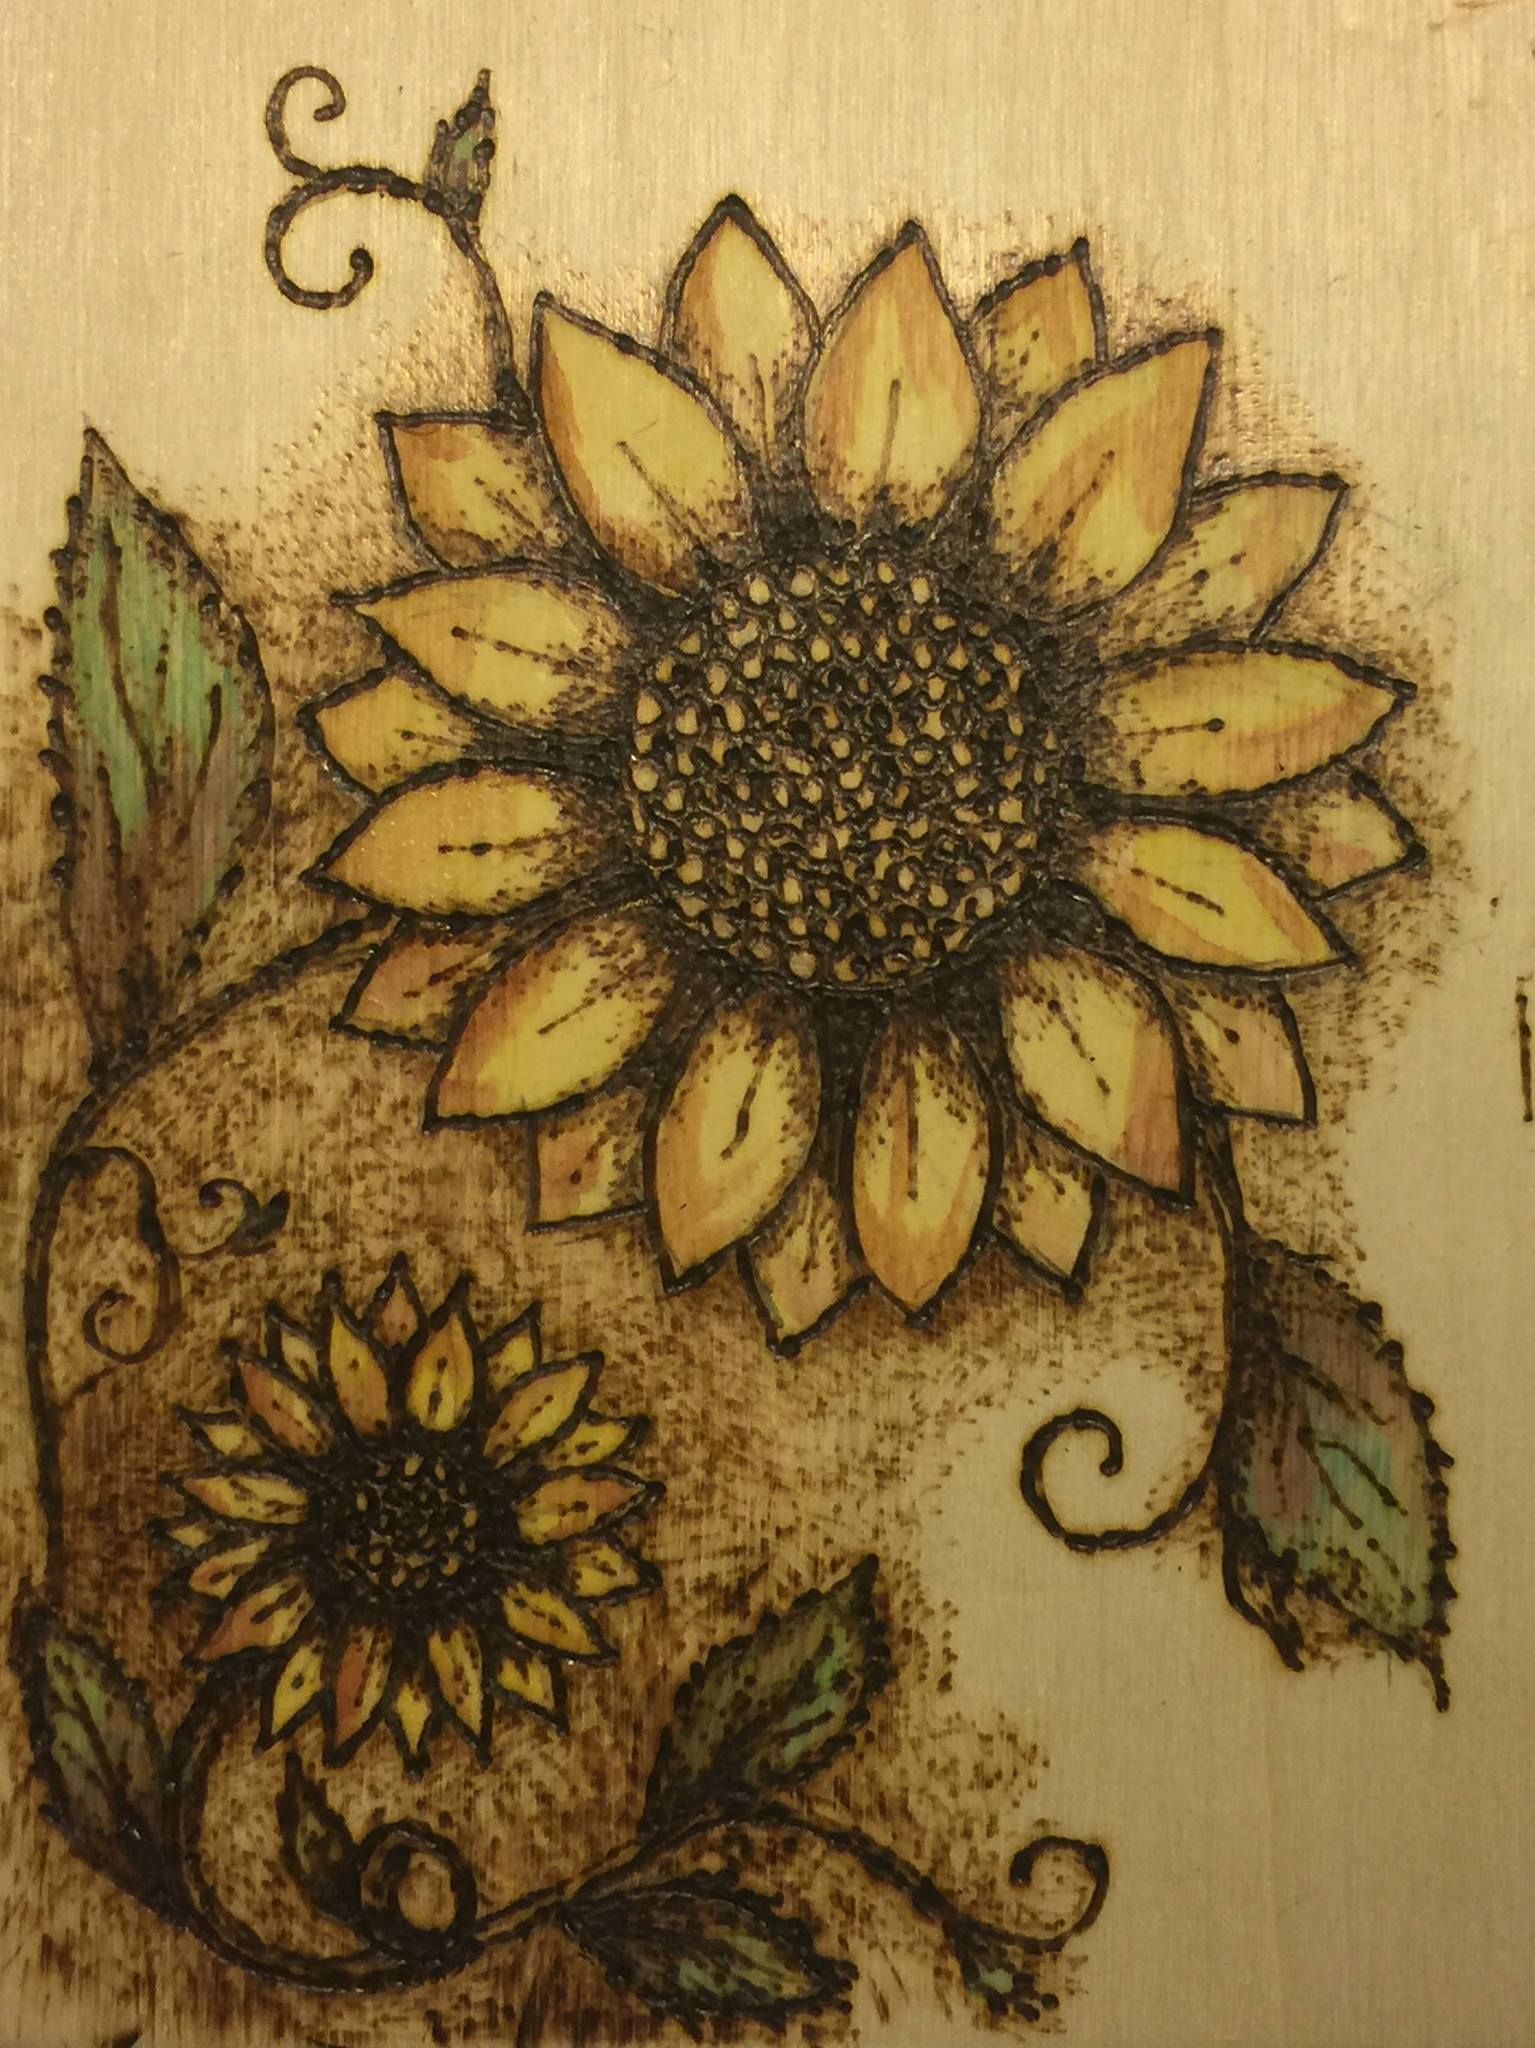 Wood burning & watercolor sunflowers | My Artwork | Pinterest ...